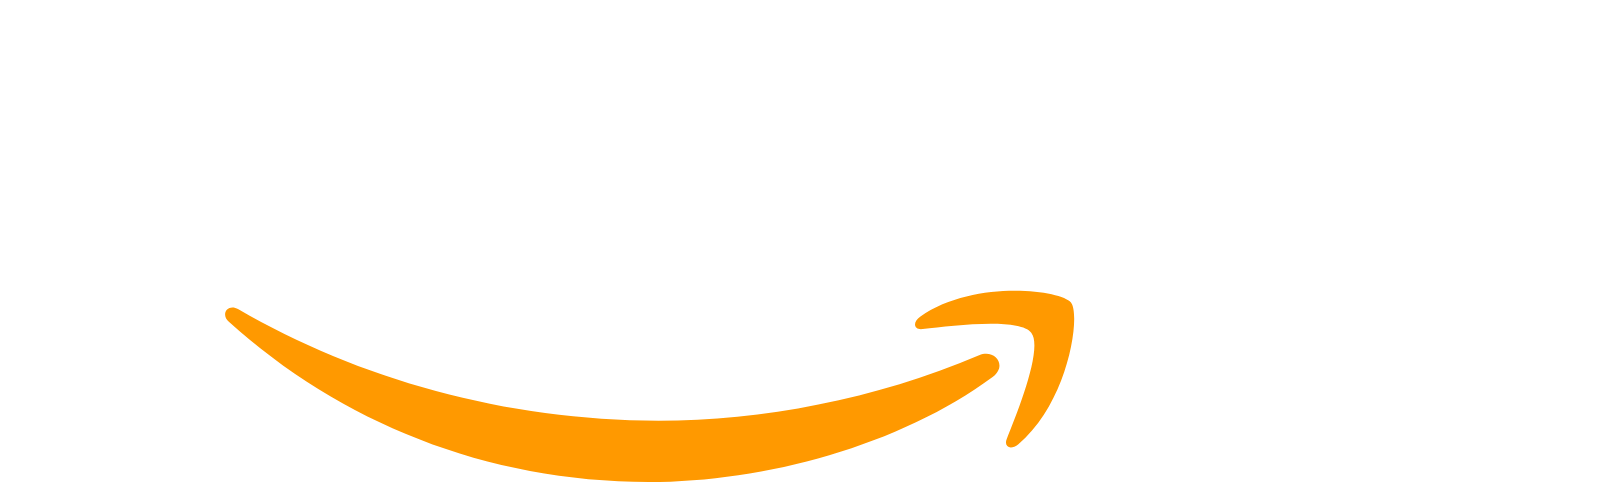 Amazon logo large for dark backgrounds (transparent PNG)